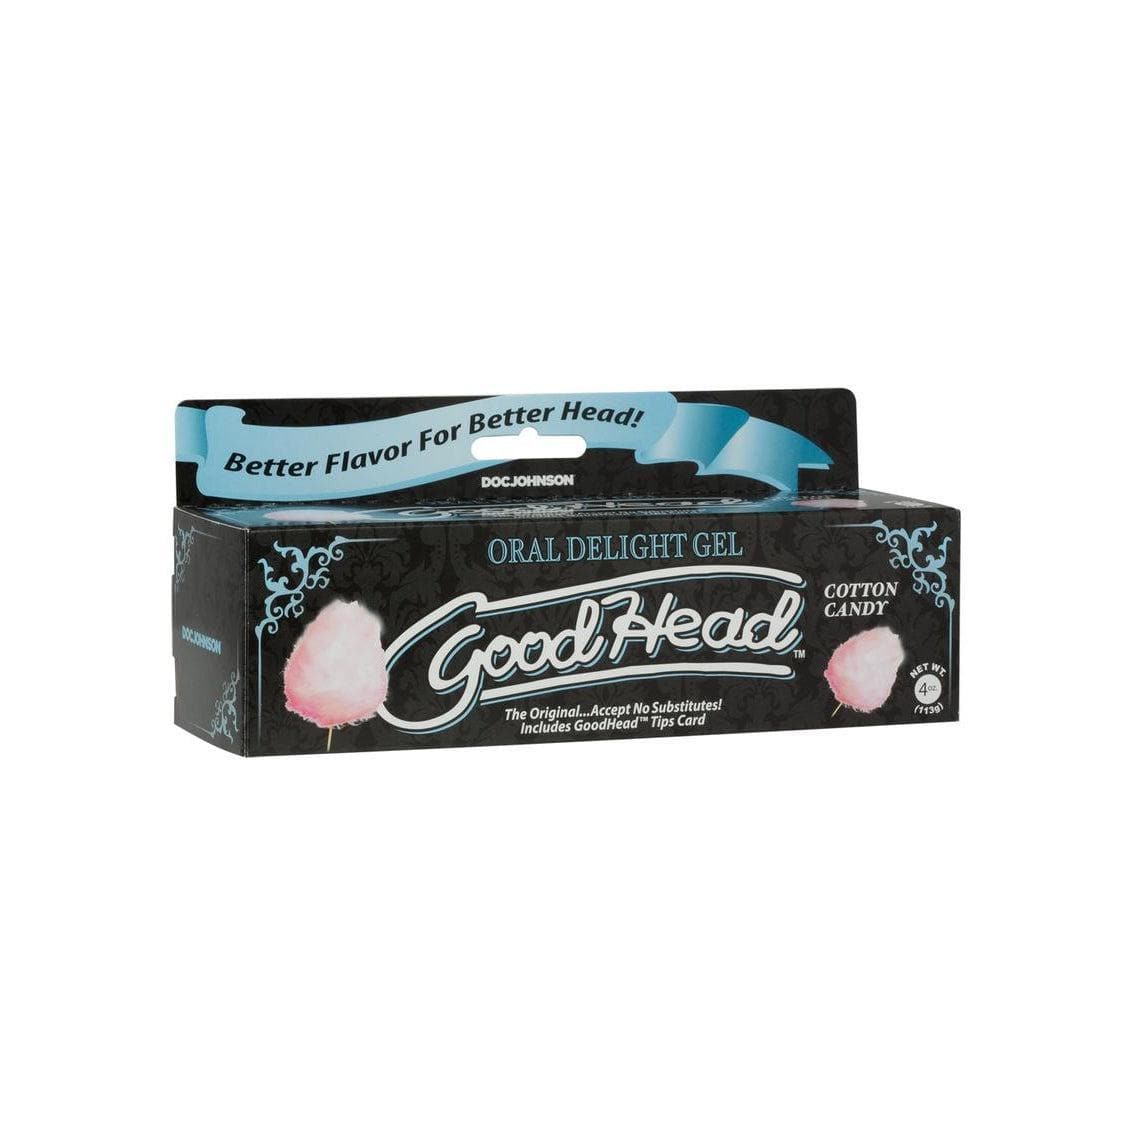 Goodhead Tasty Gel Flavored Oral Delight 4 oz - Romantic Blessings